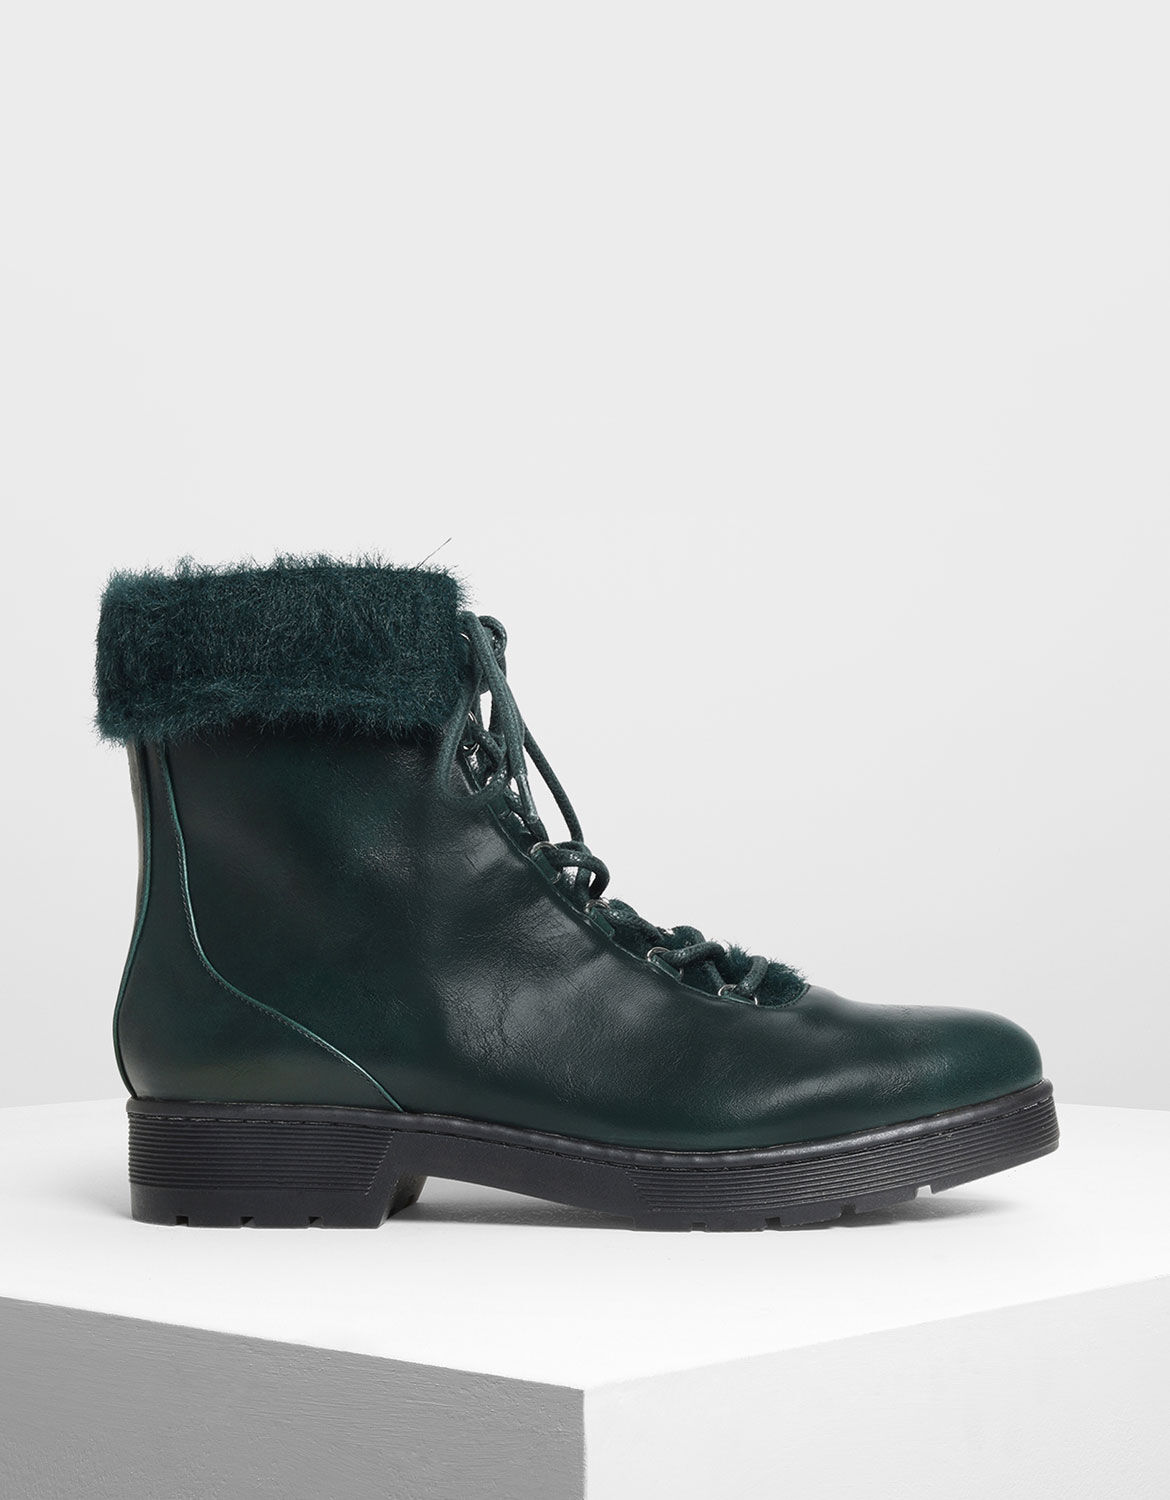 dark green combat boots